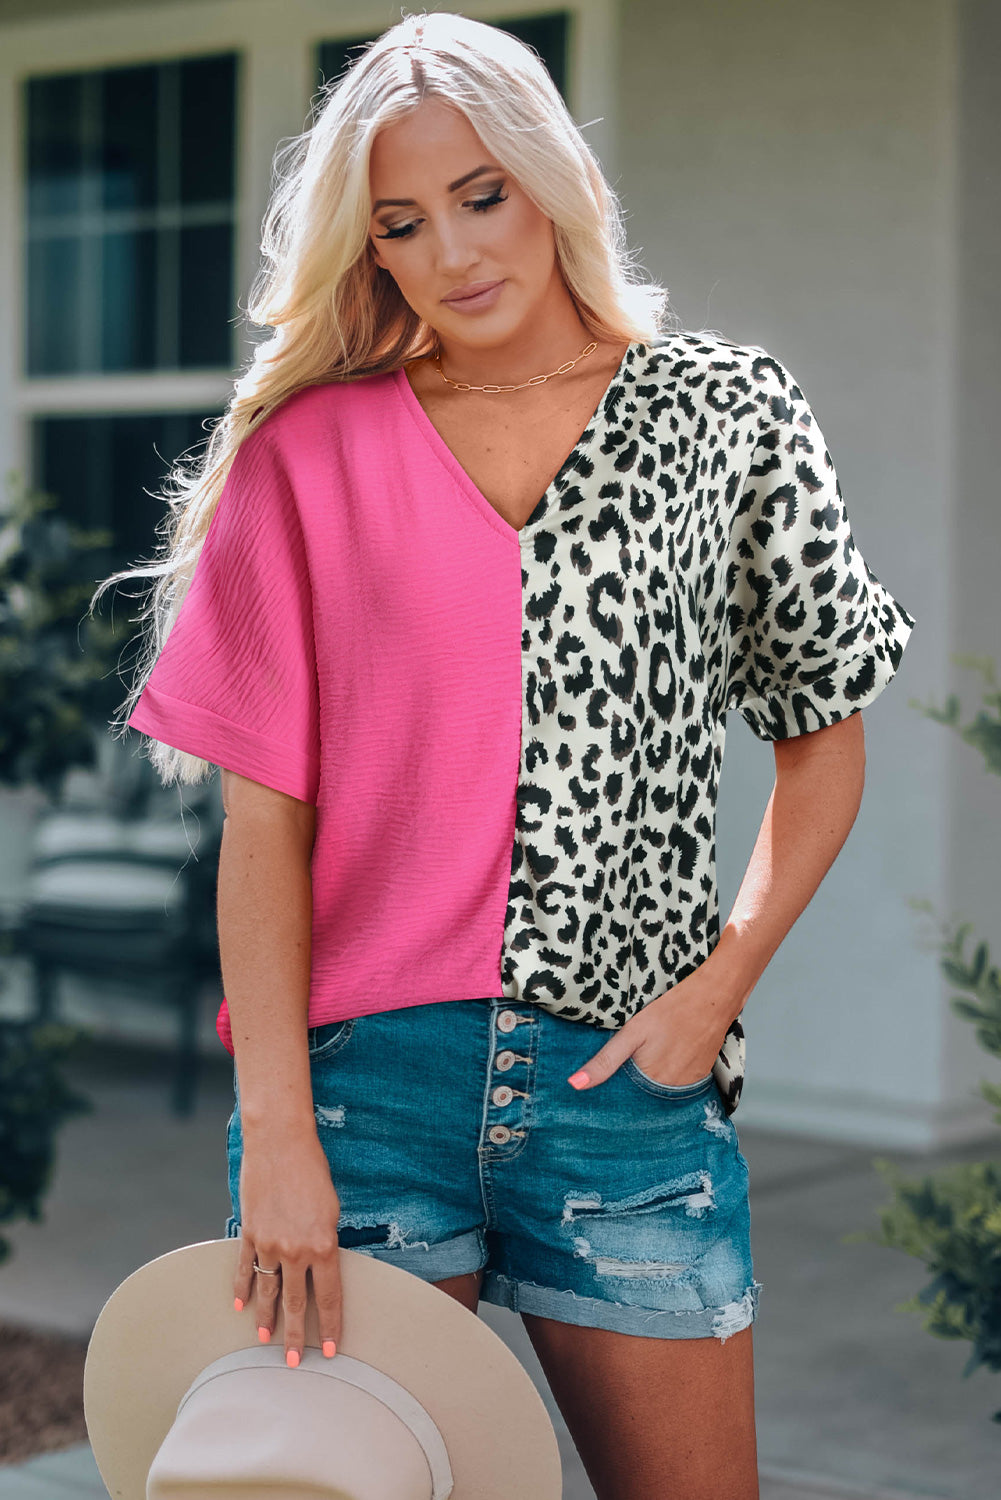 Khakifarbene Bluse mit kontrastierendem Leoparden-Farbblock